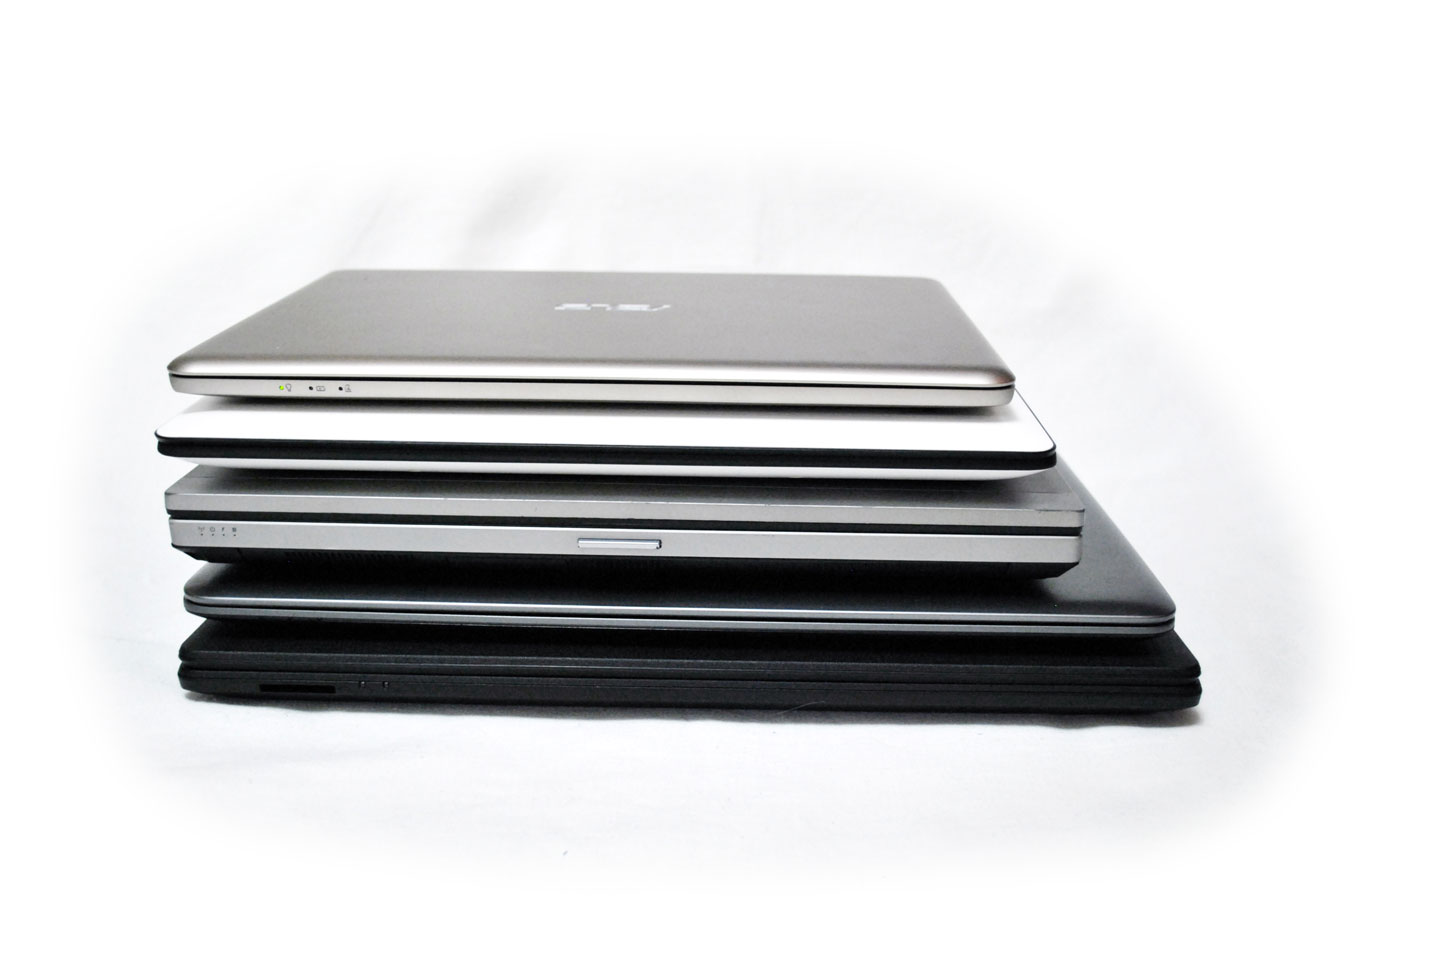 Odshora – ASUS VivoBook E200HA, Lenovo IdealPad Yoga 3000, HP EliteBook 2560p, ASUS EeeBook E403SA, Acer Aspire ES14